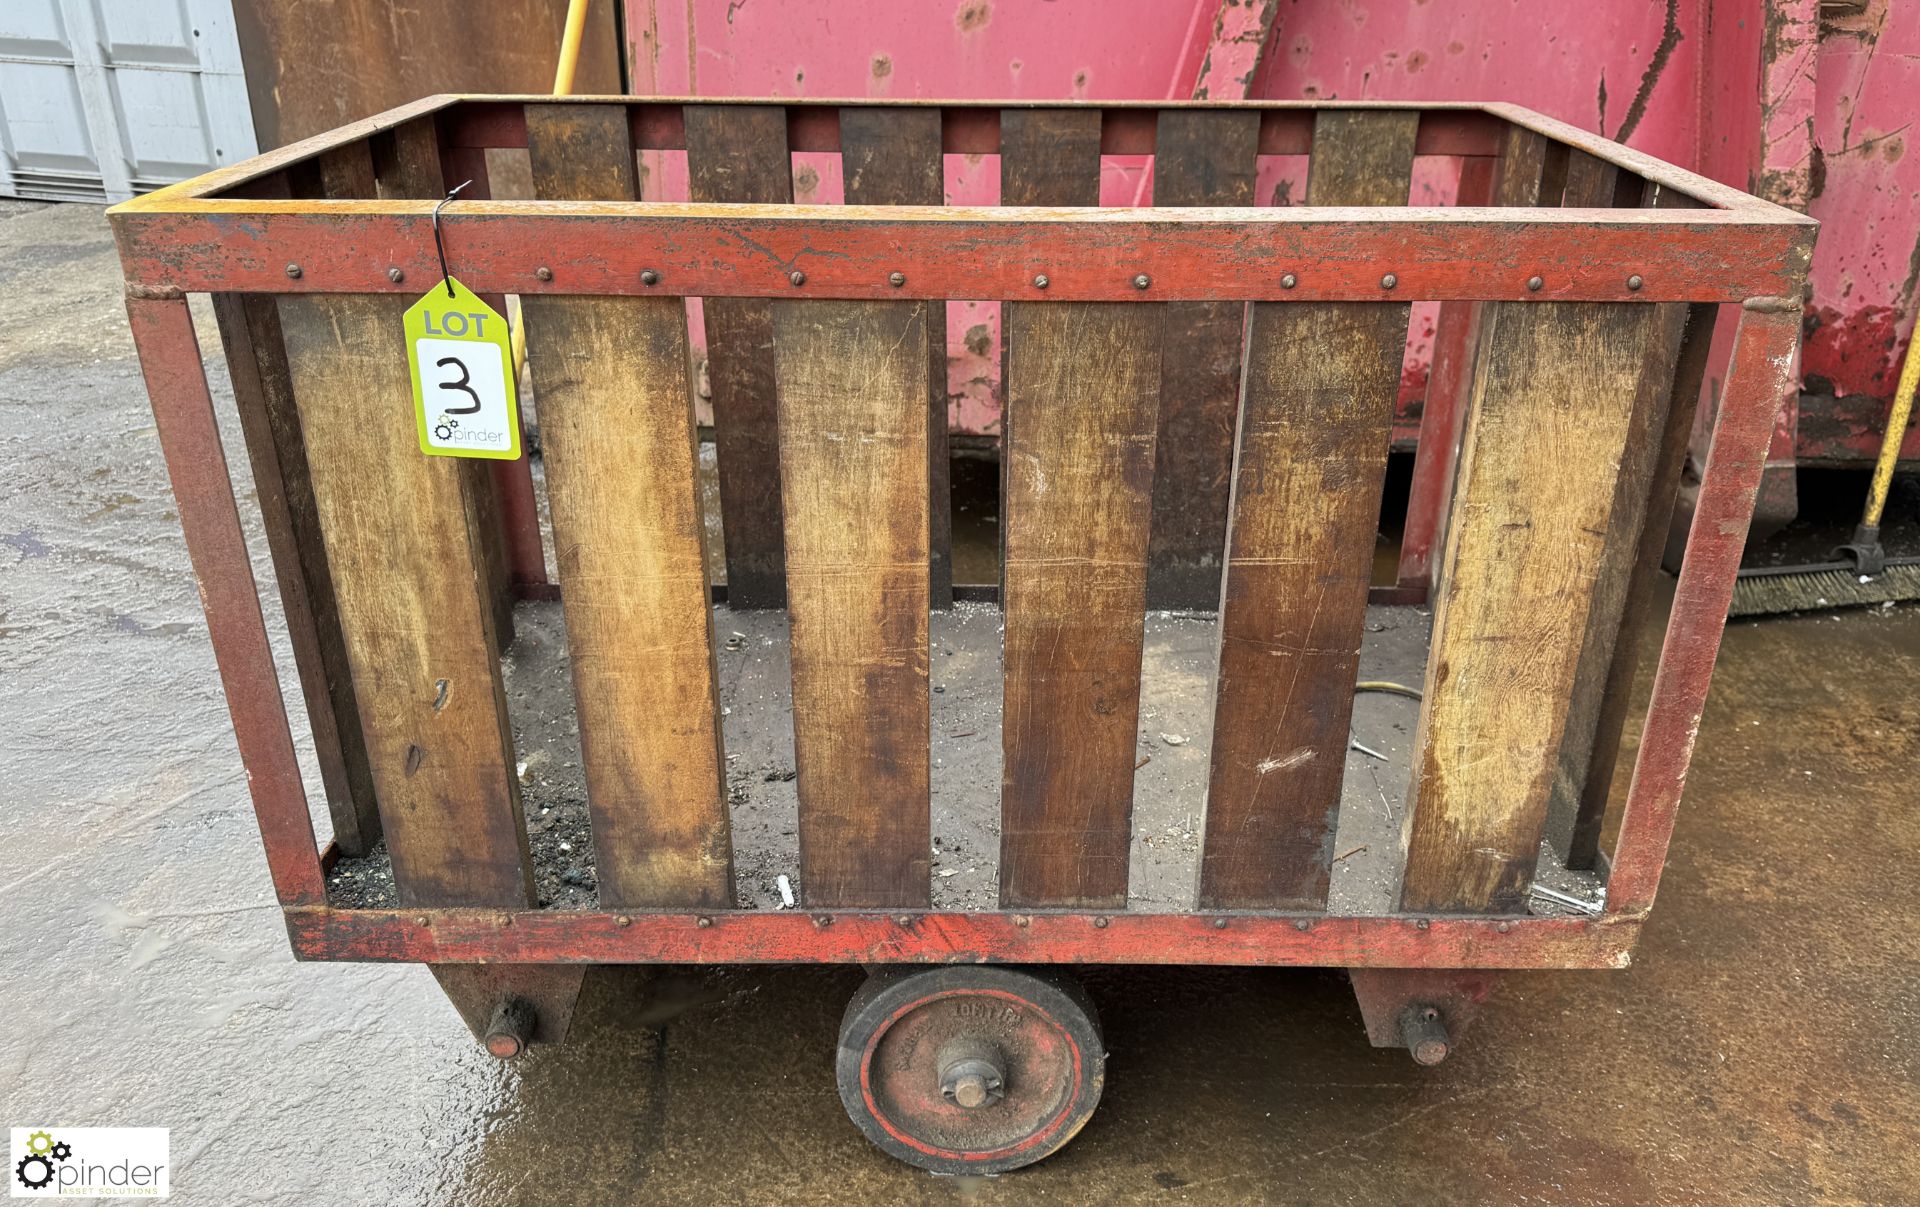 Vintage steel framed Mill Cart, 1070mm x 620mm x 850mm